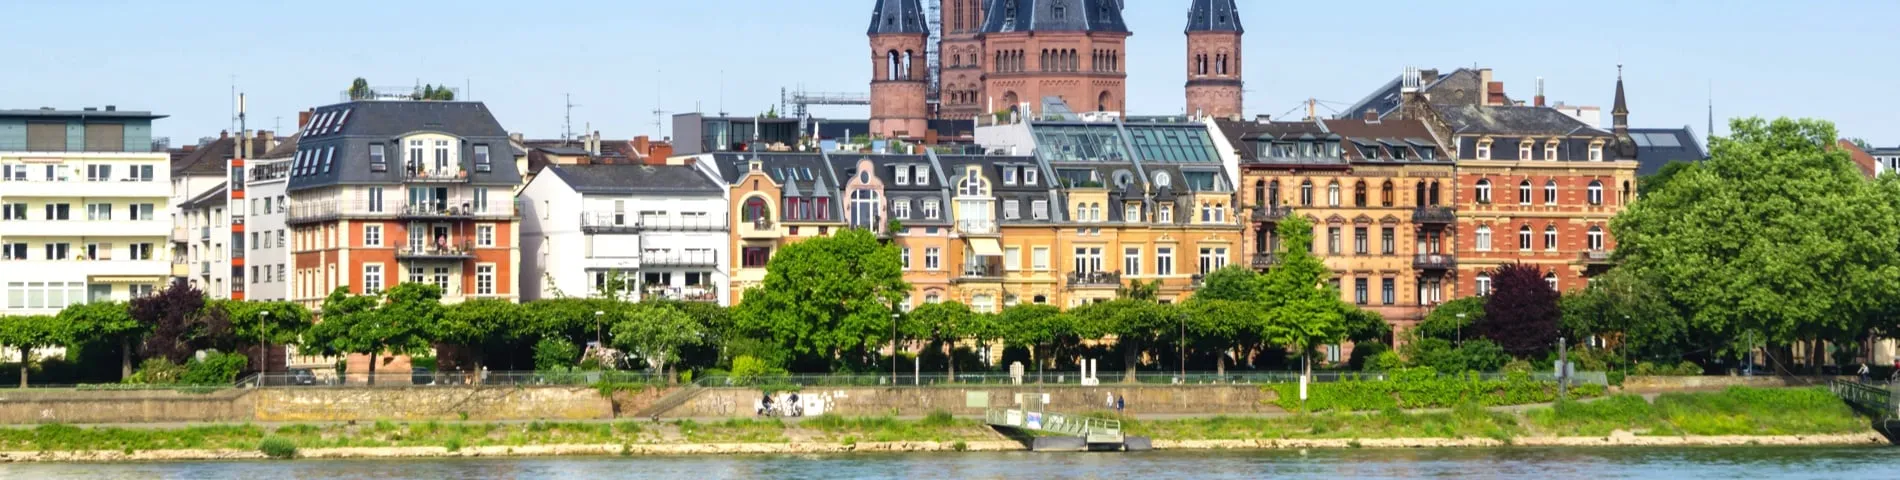 Mainz - 